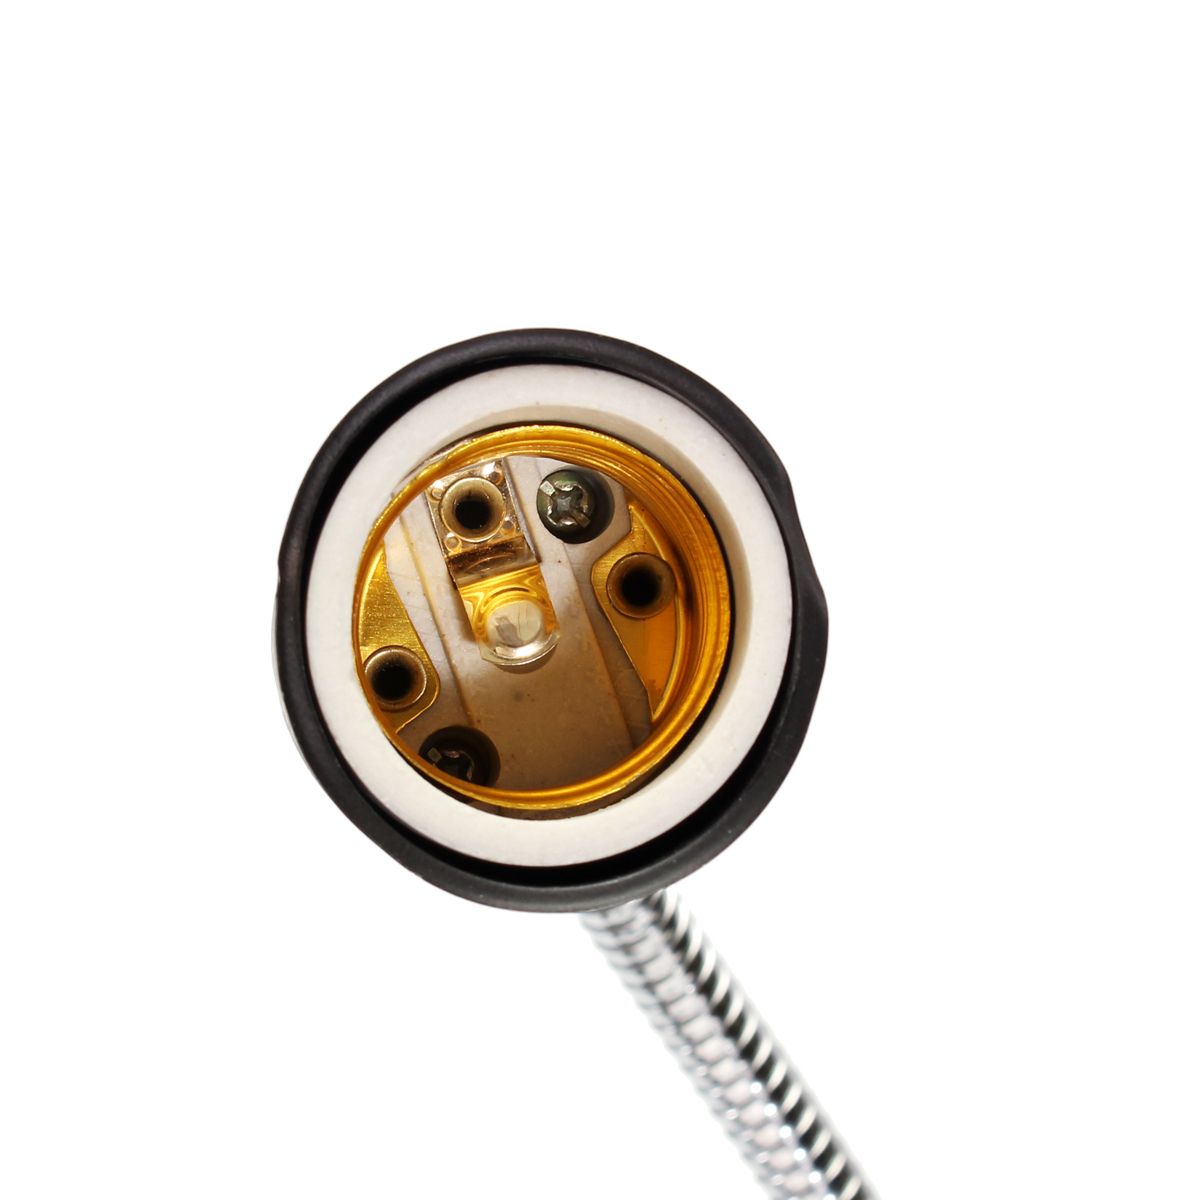 20CM-E27-Flexible-Bulb-Adapter-Lampholder-Socket-with-Clip-Dimming-Switch-EU-US-Plug-for-Pet-Light-1309747